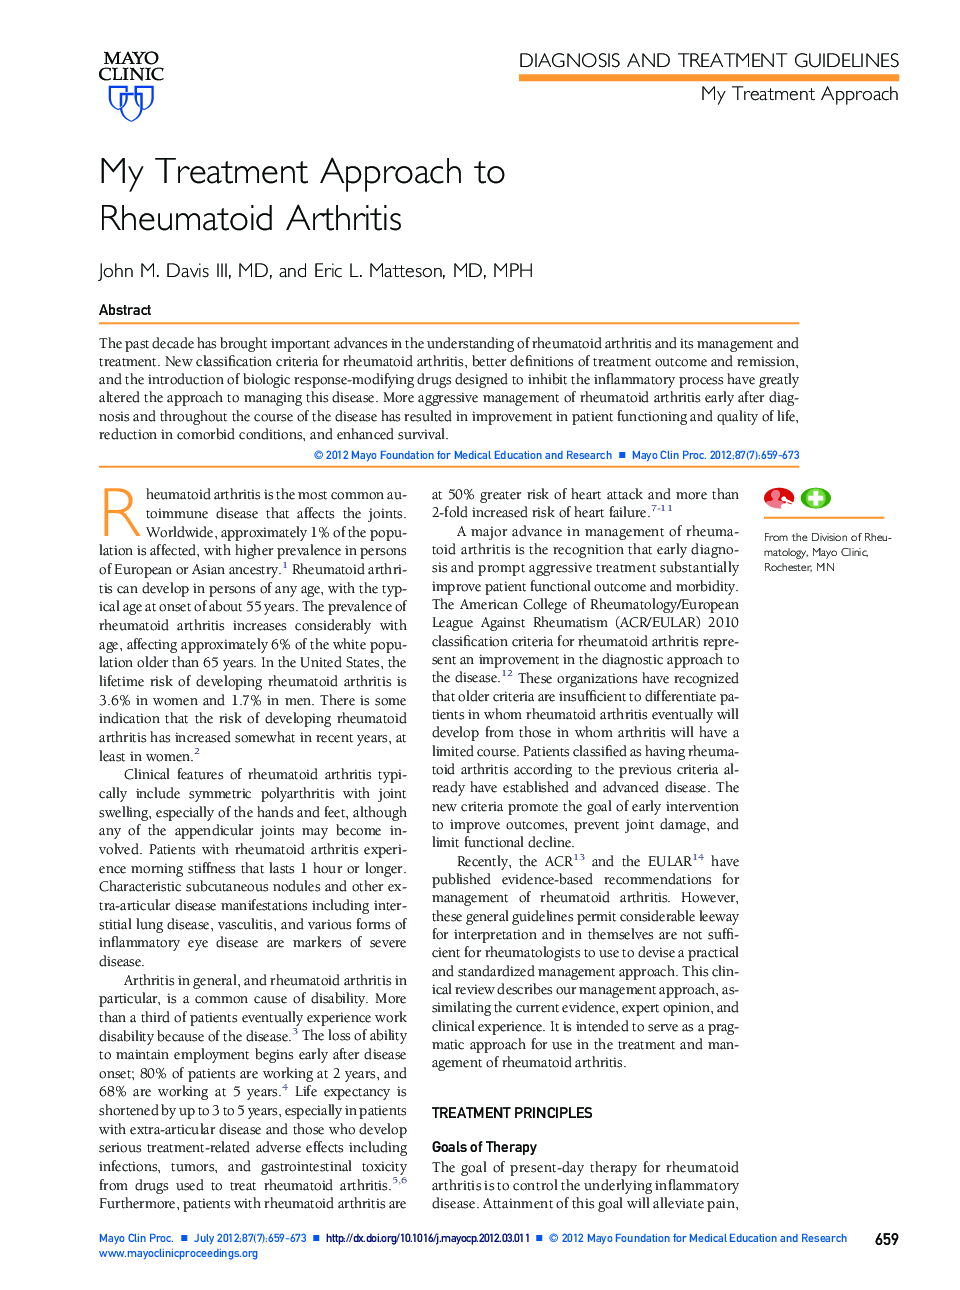 My Treatment Approach to Rheumatoid Arthritis